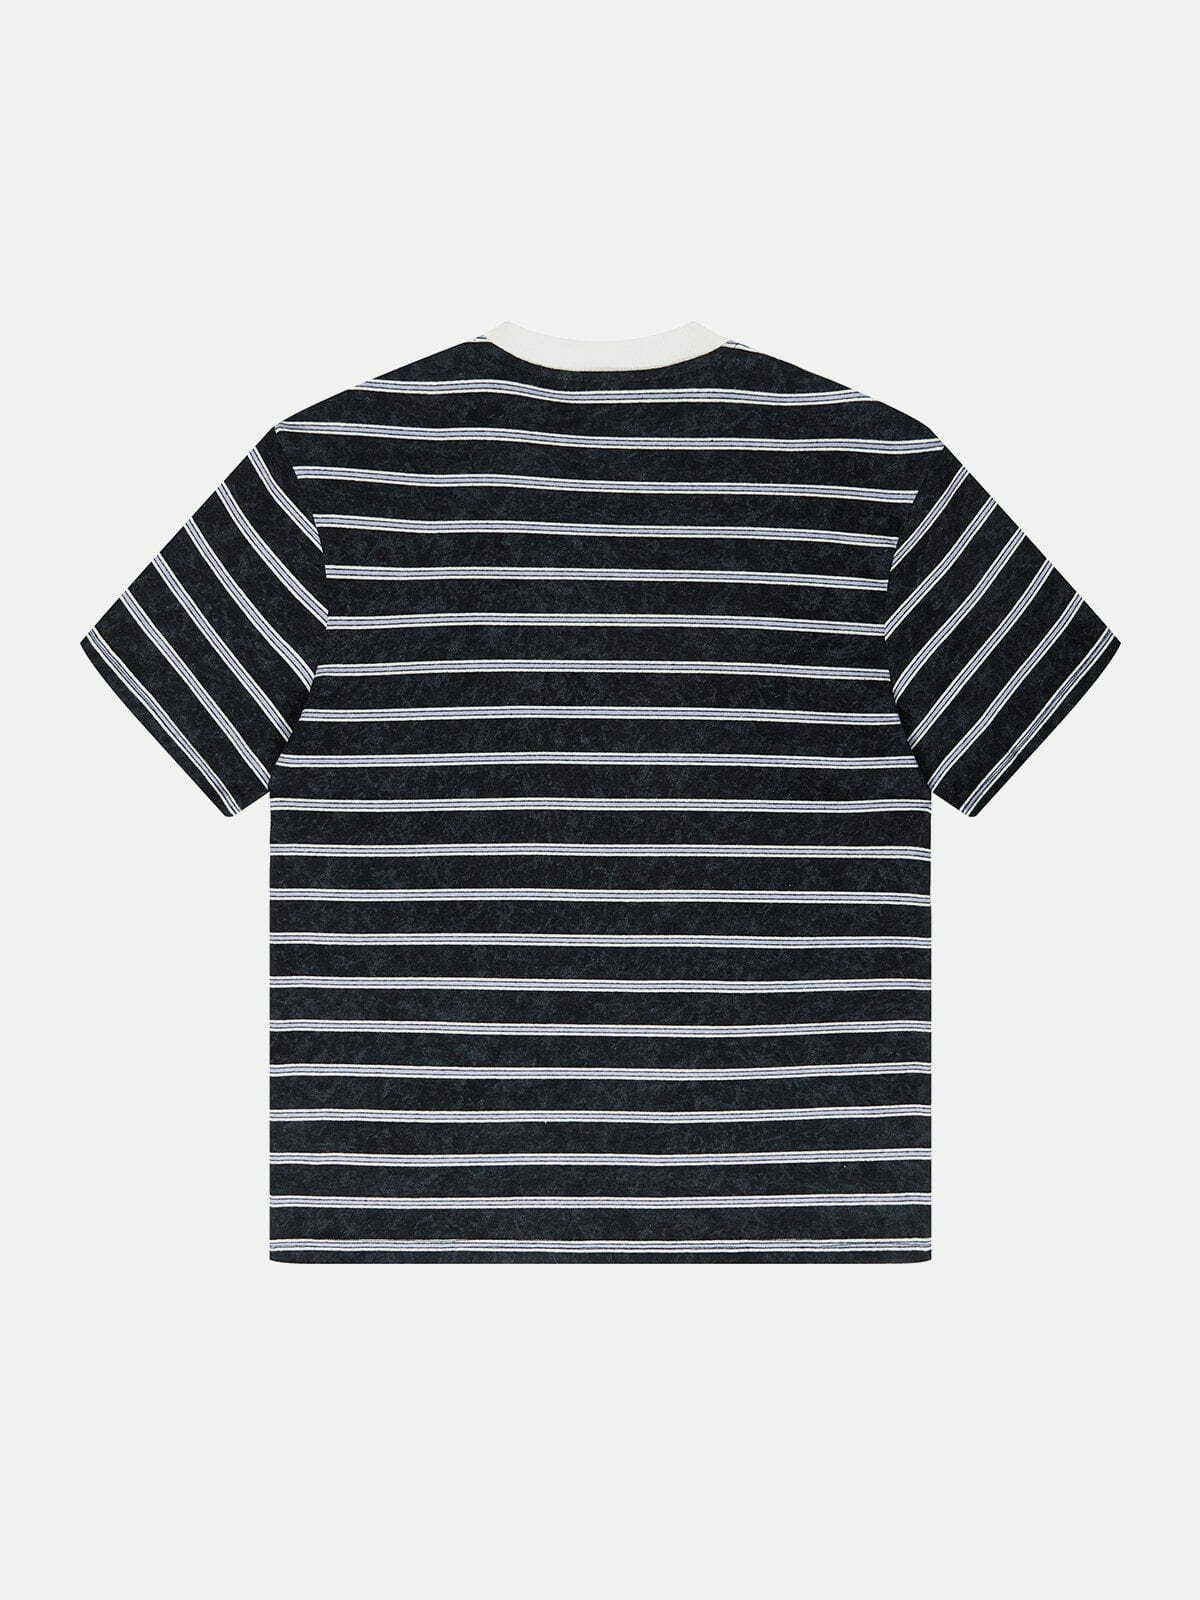 clashing stripe tee bold & edgy y2k streetwear 7921